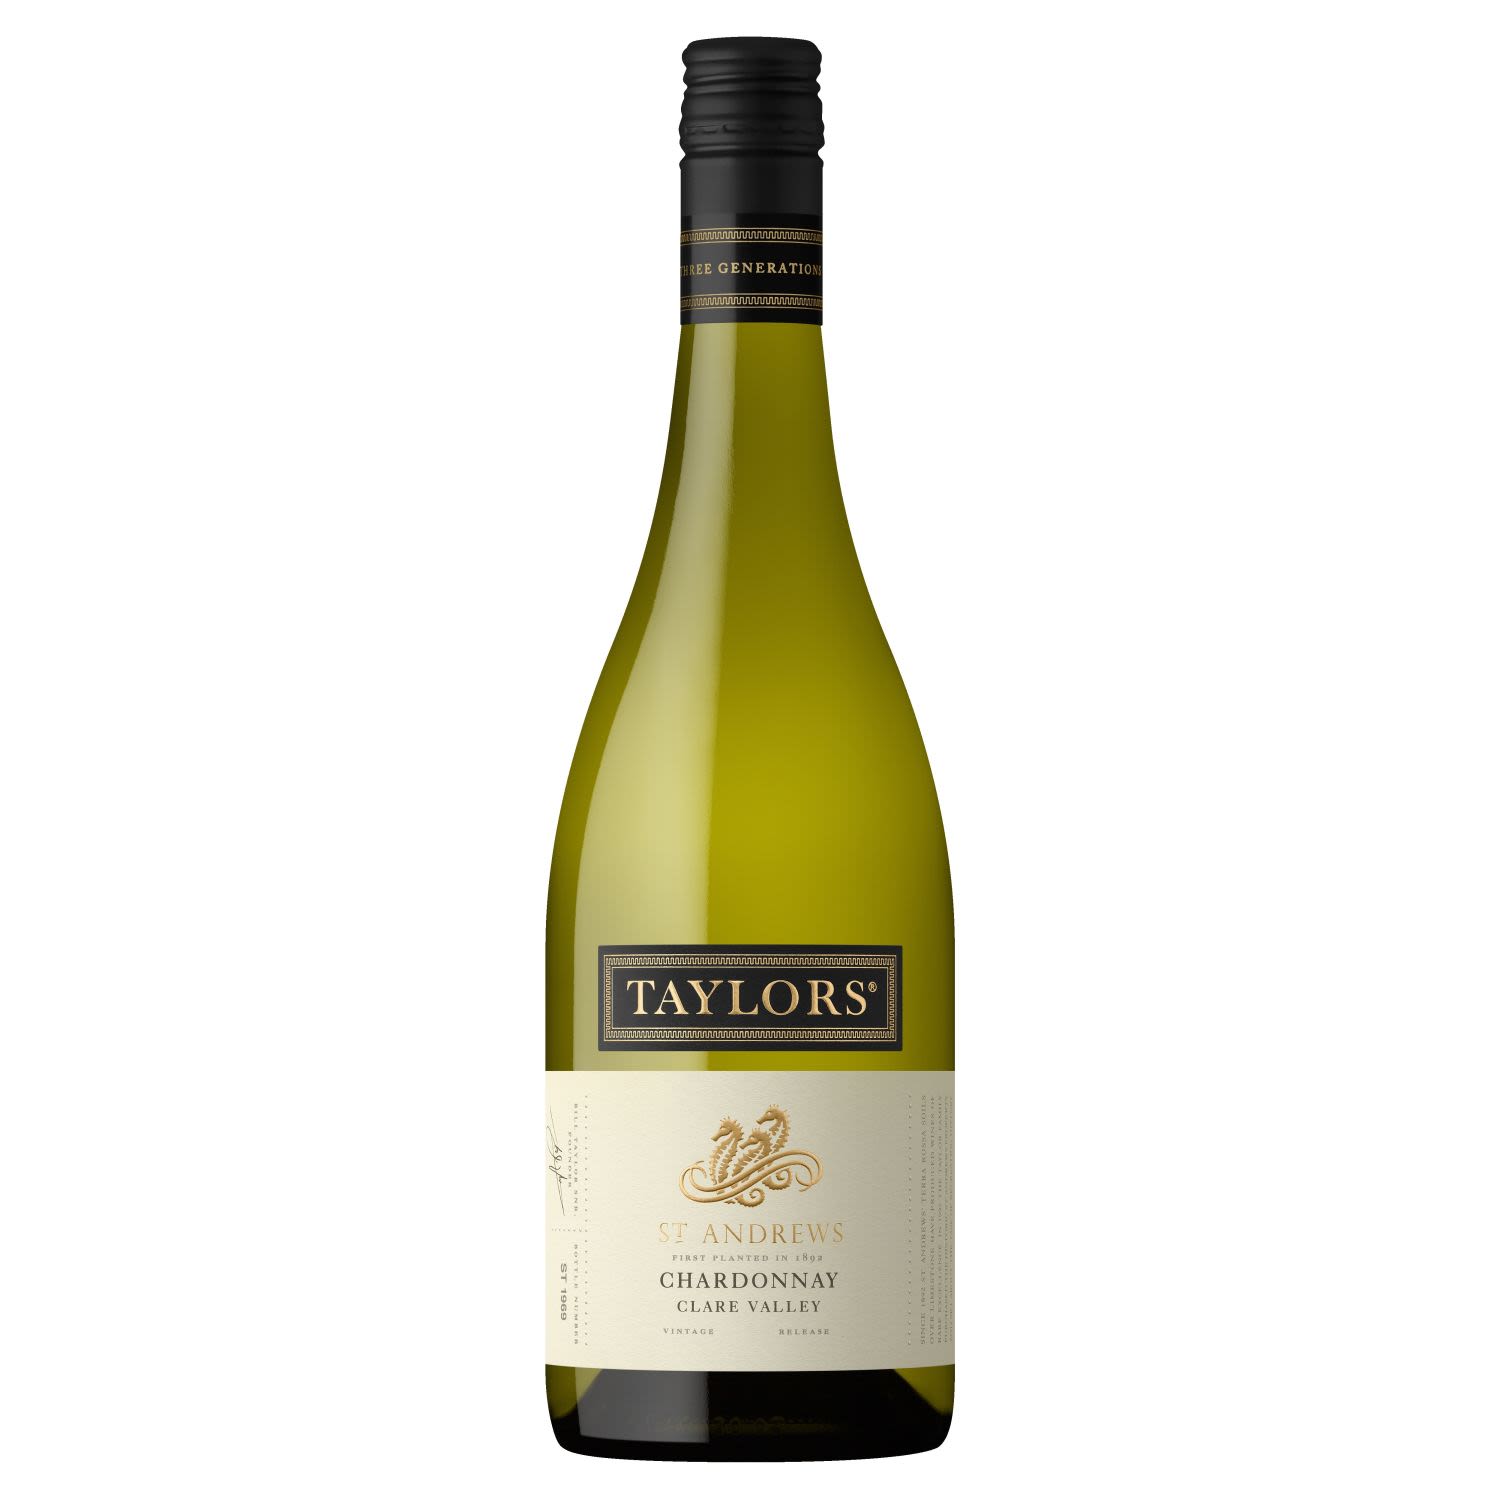 Taylors St Andews Chardonnay 750mL Bottle